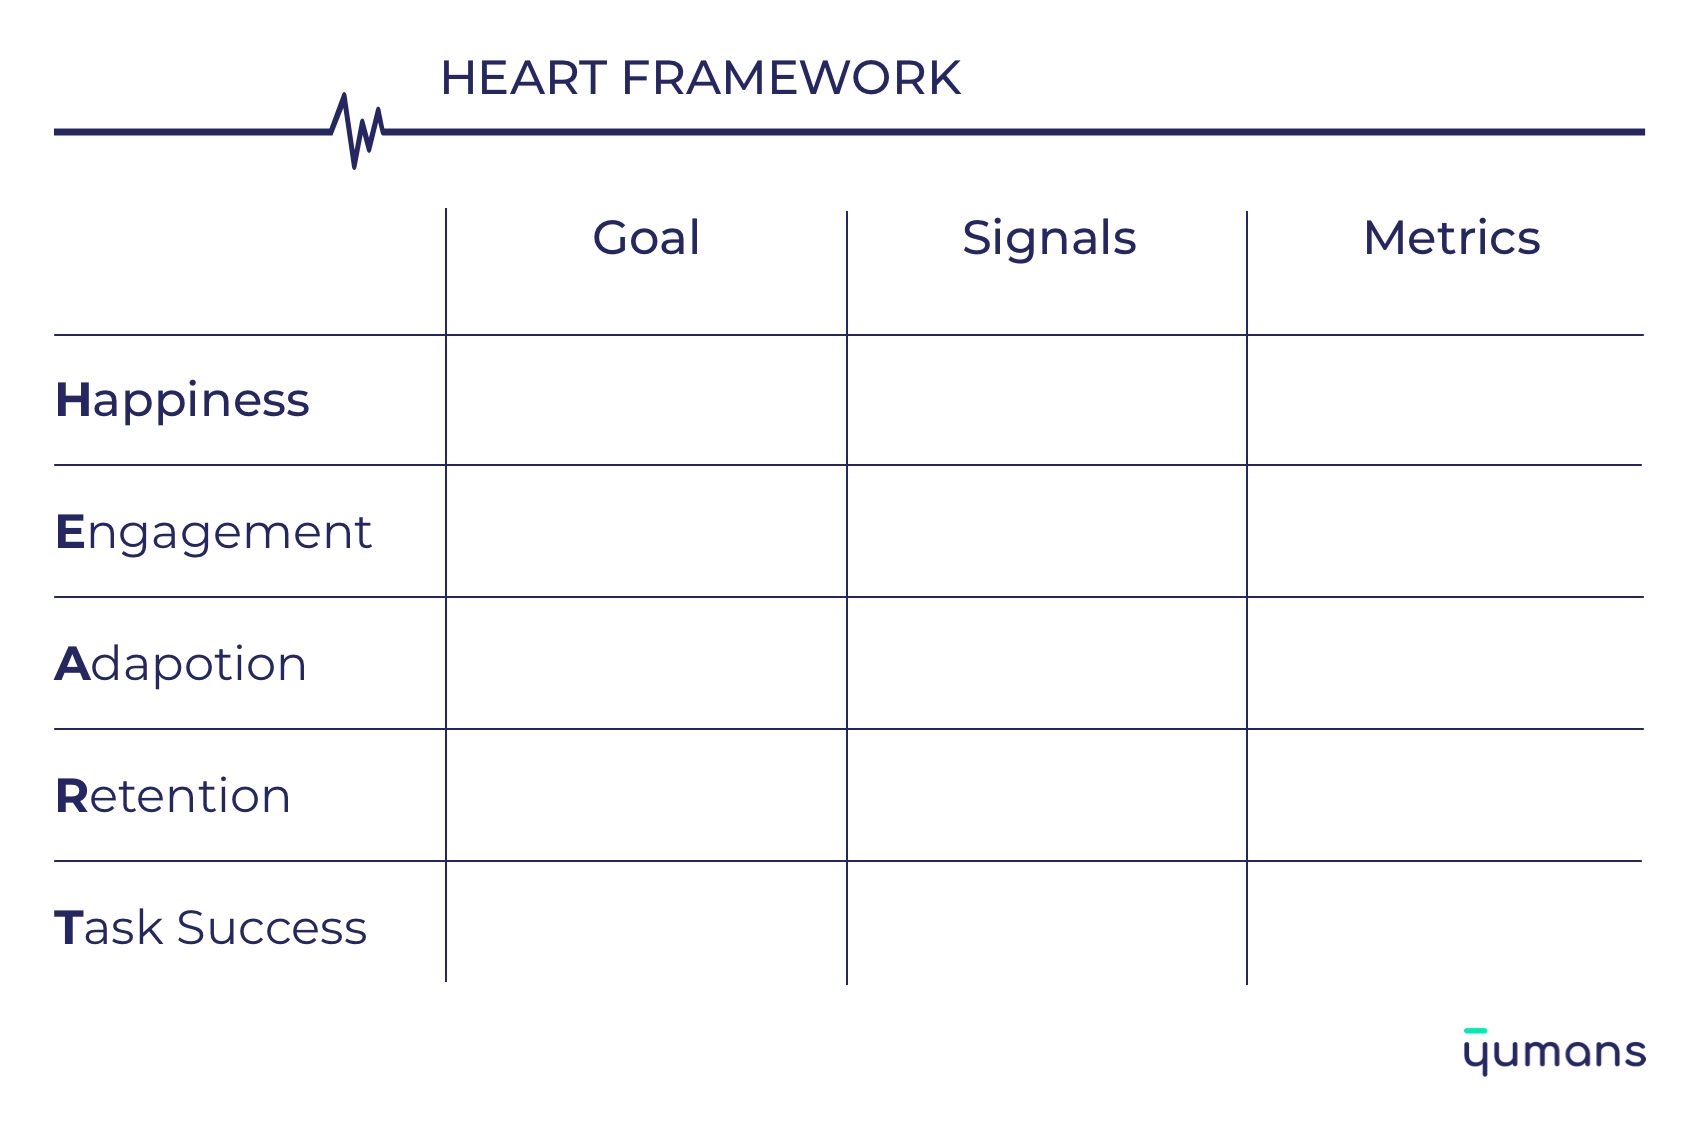 HEART Framework